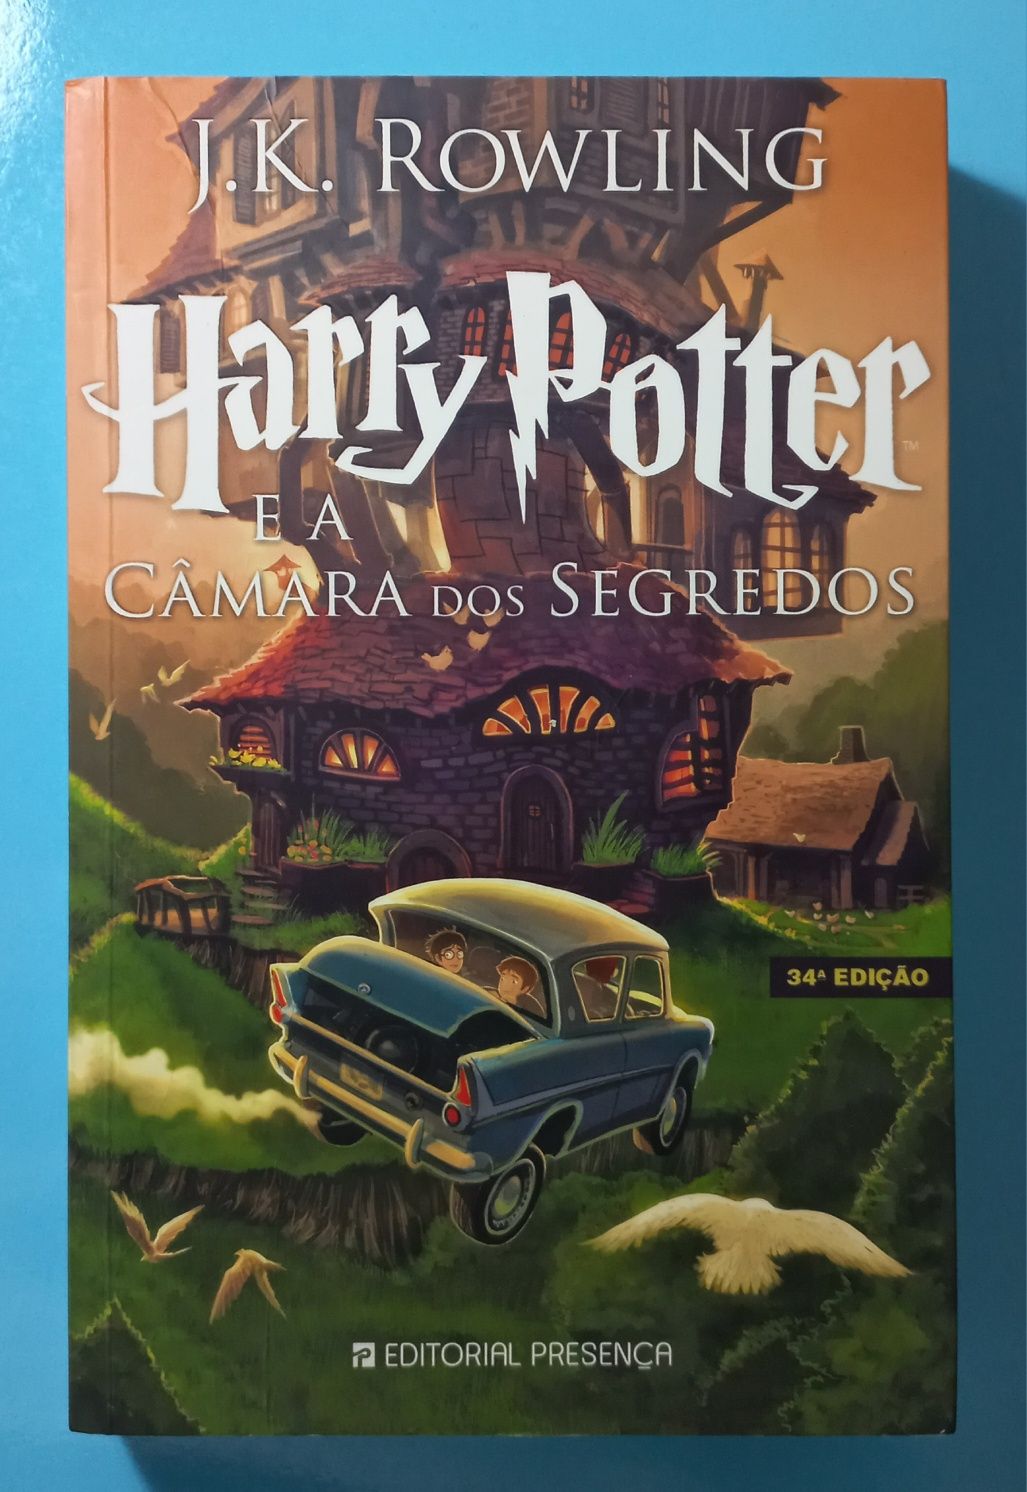 Livro da saga Harry Potter